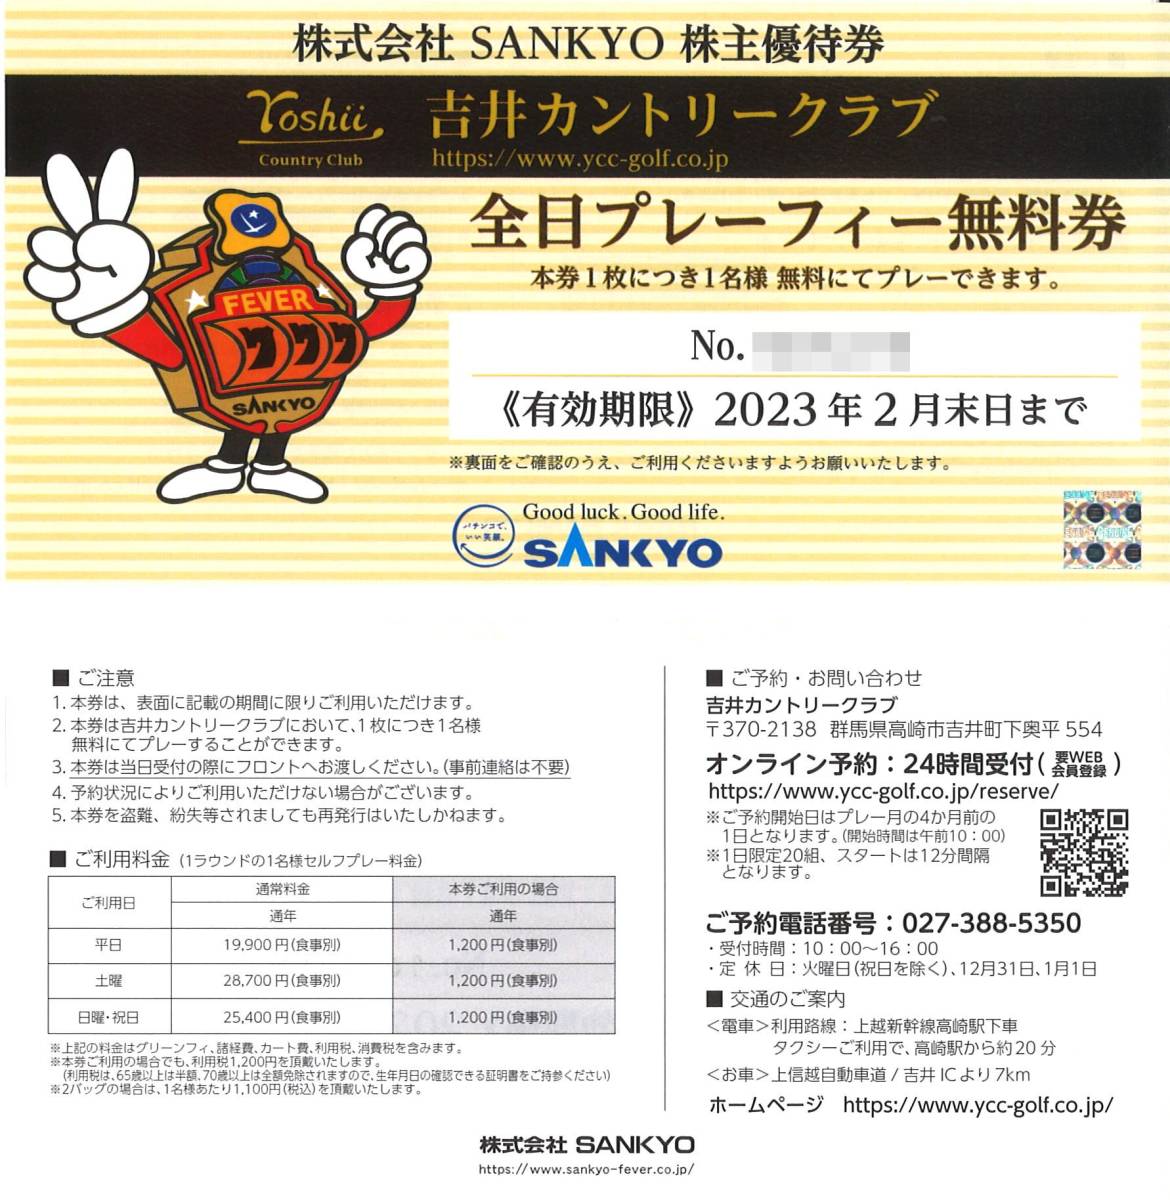 SANKYO 株主優待 吉井カントリークラブ 全日プレーフィー無料券(4枚